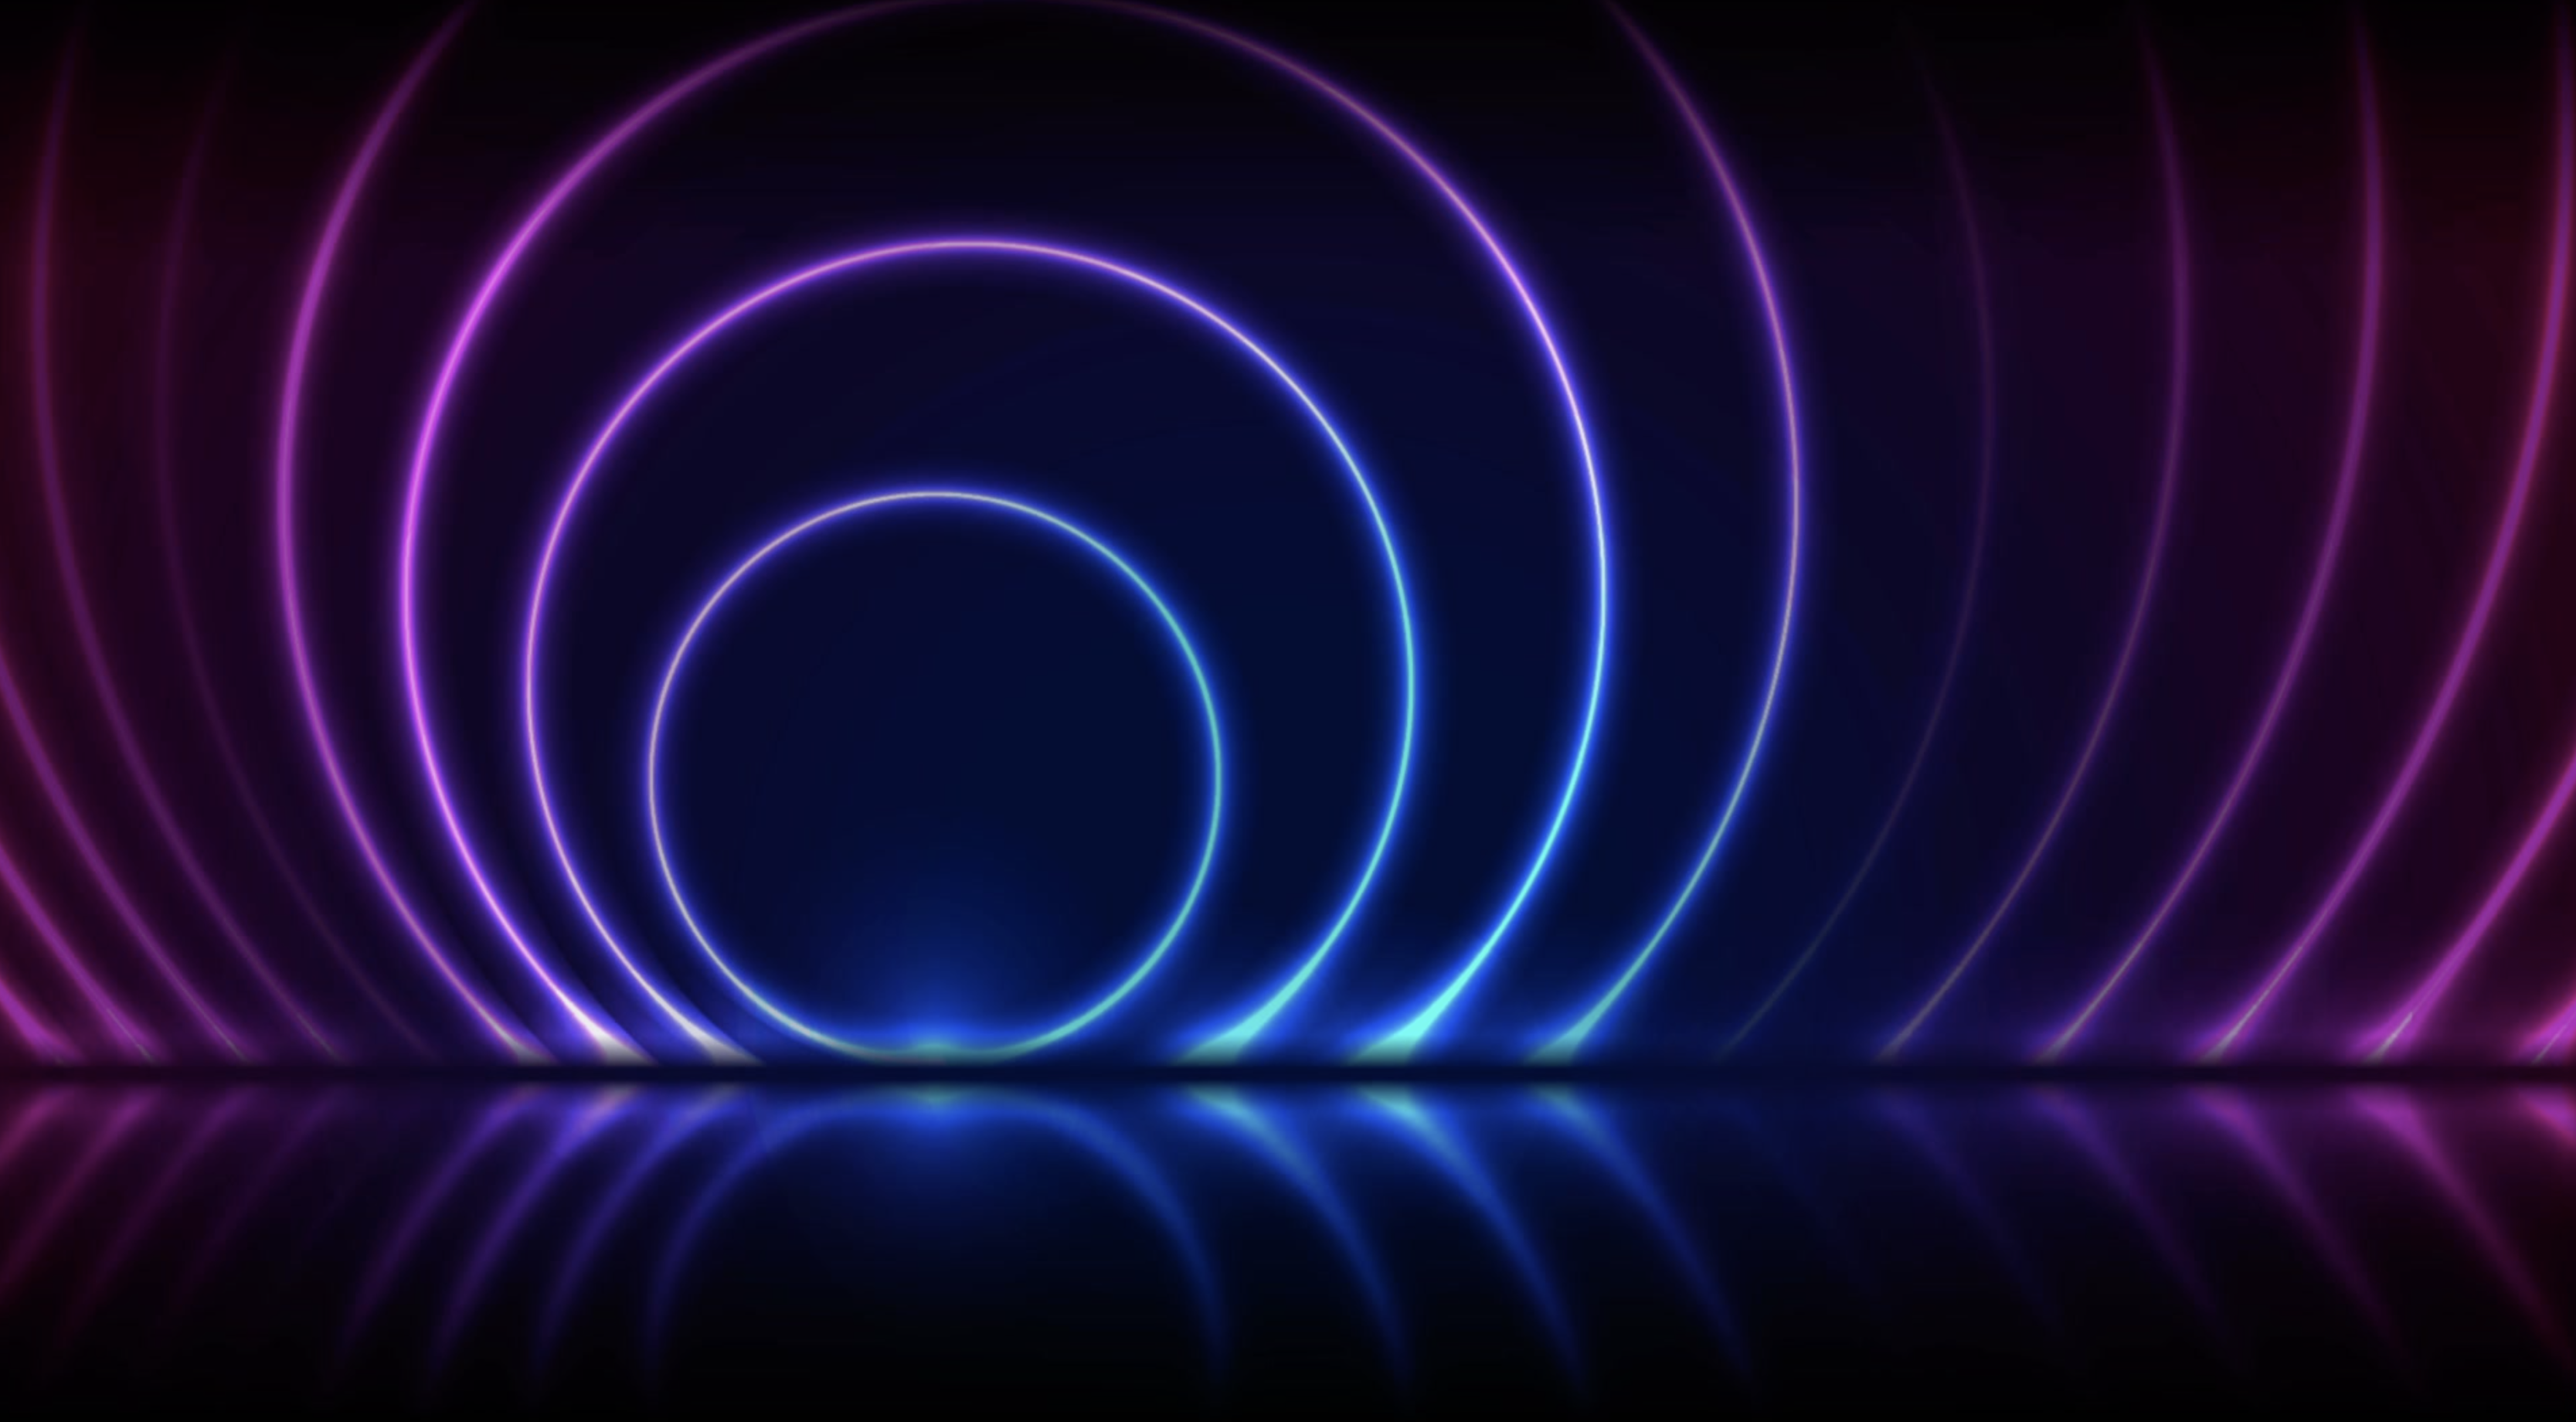 Digital graphic of a spiral